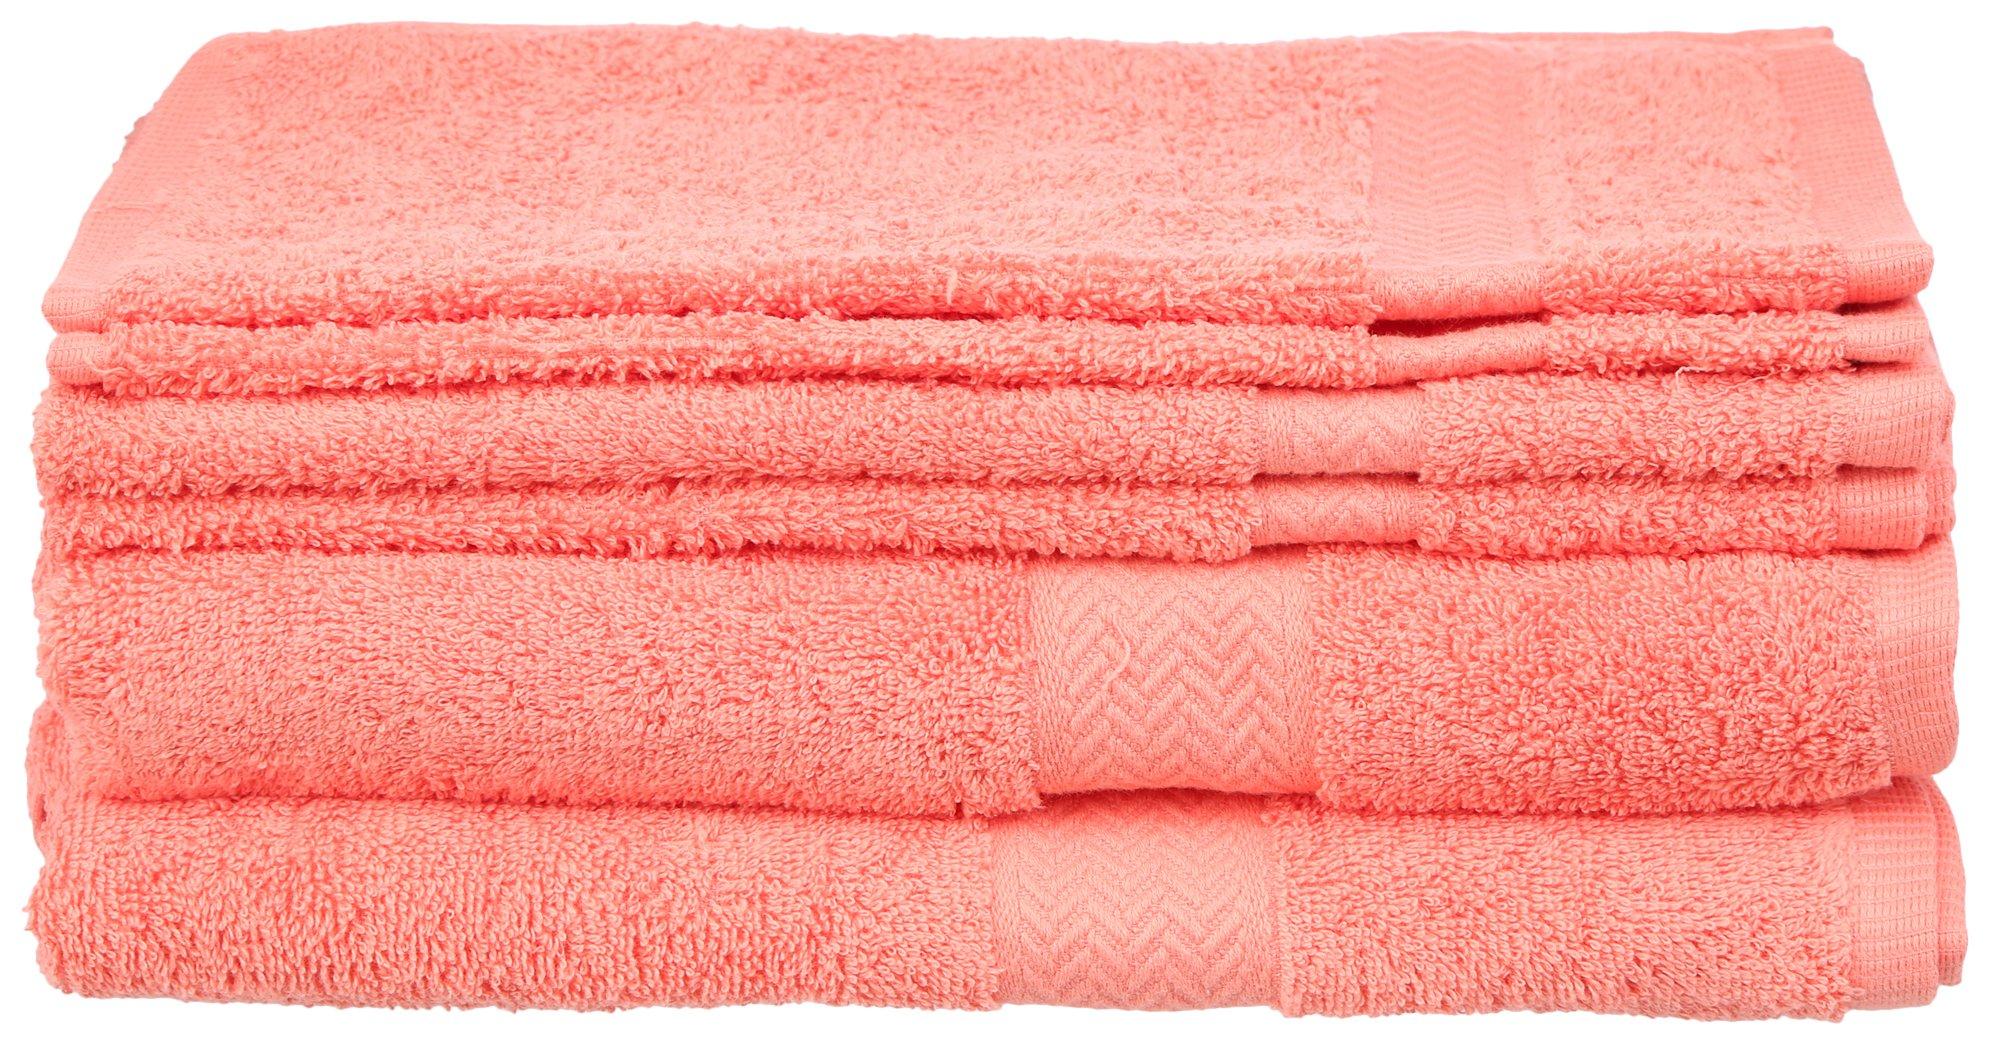 Martex 6-pc. Ringspun Cotton Towel Set